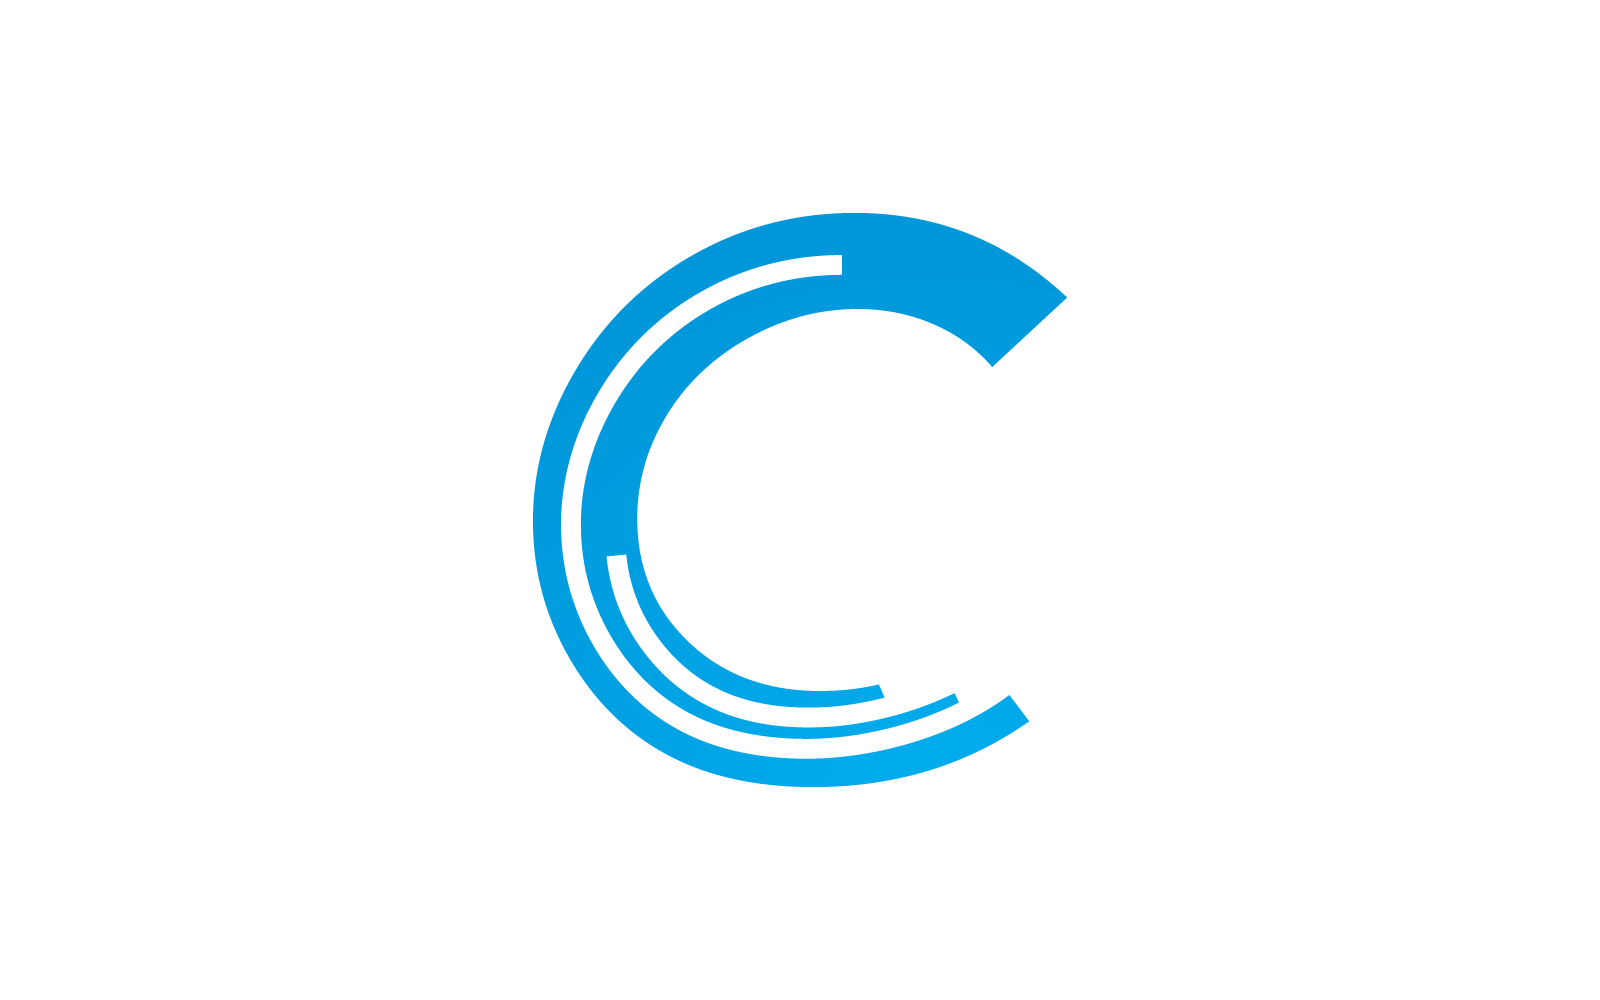 C Initial letter alphabet font logo vector design